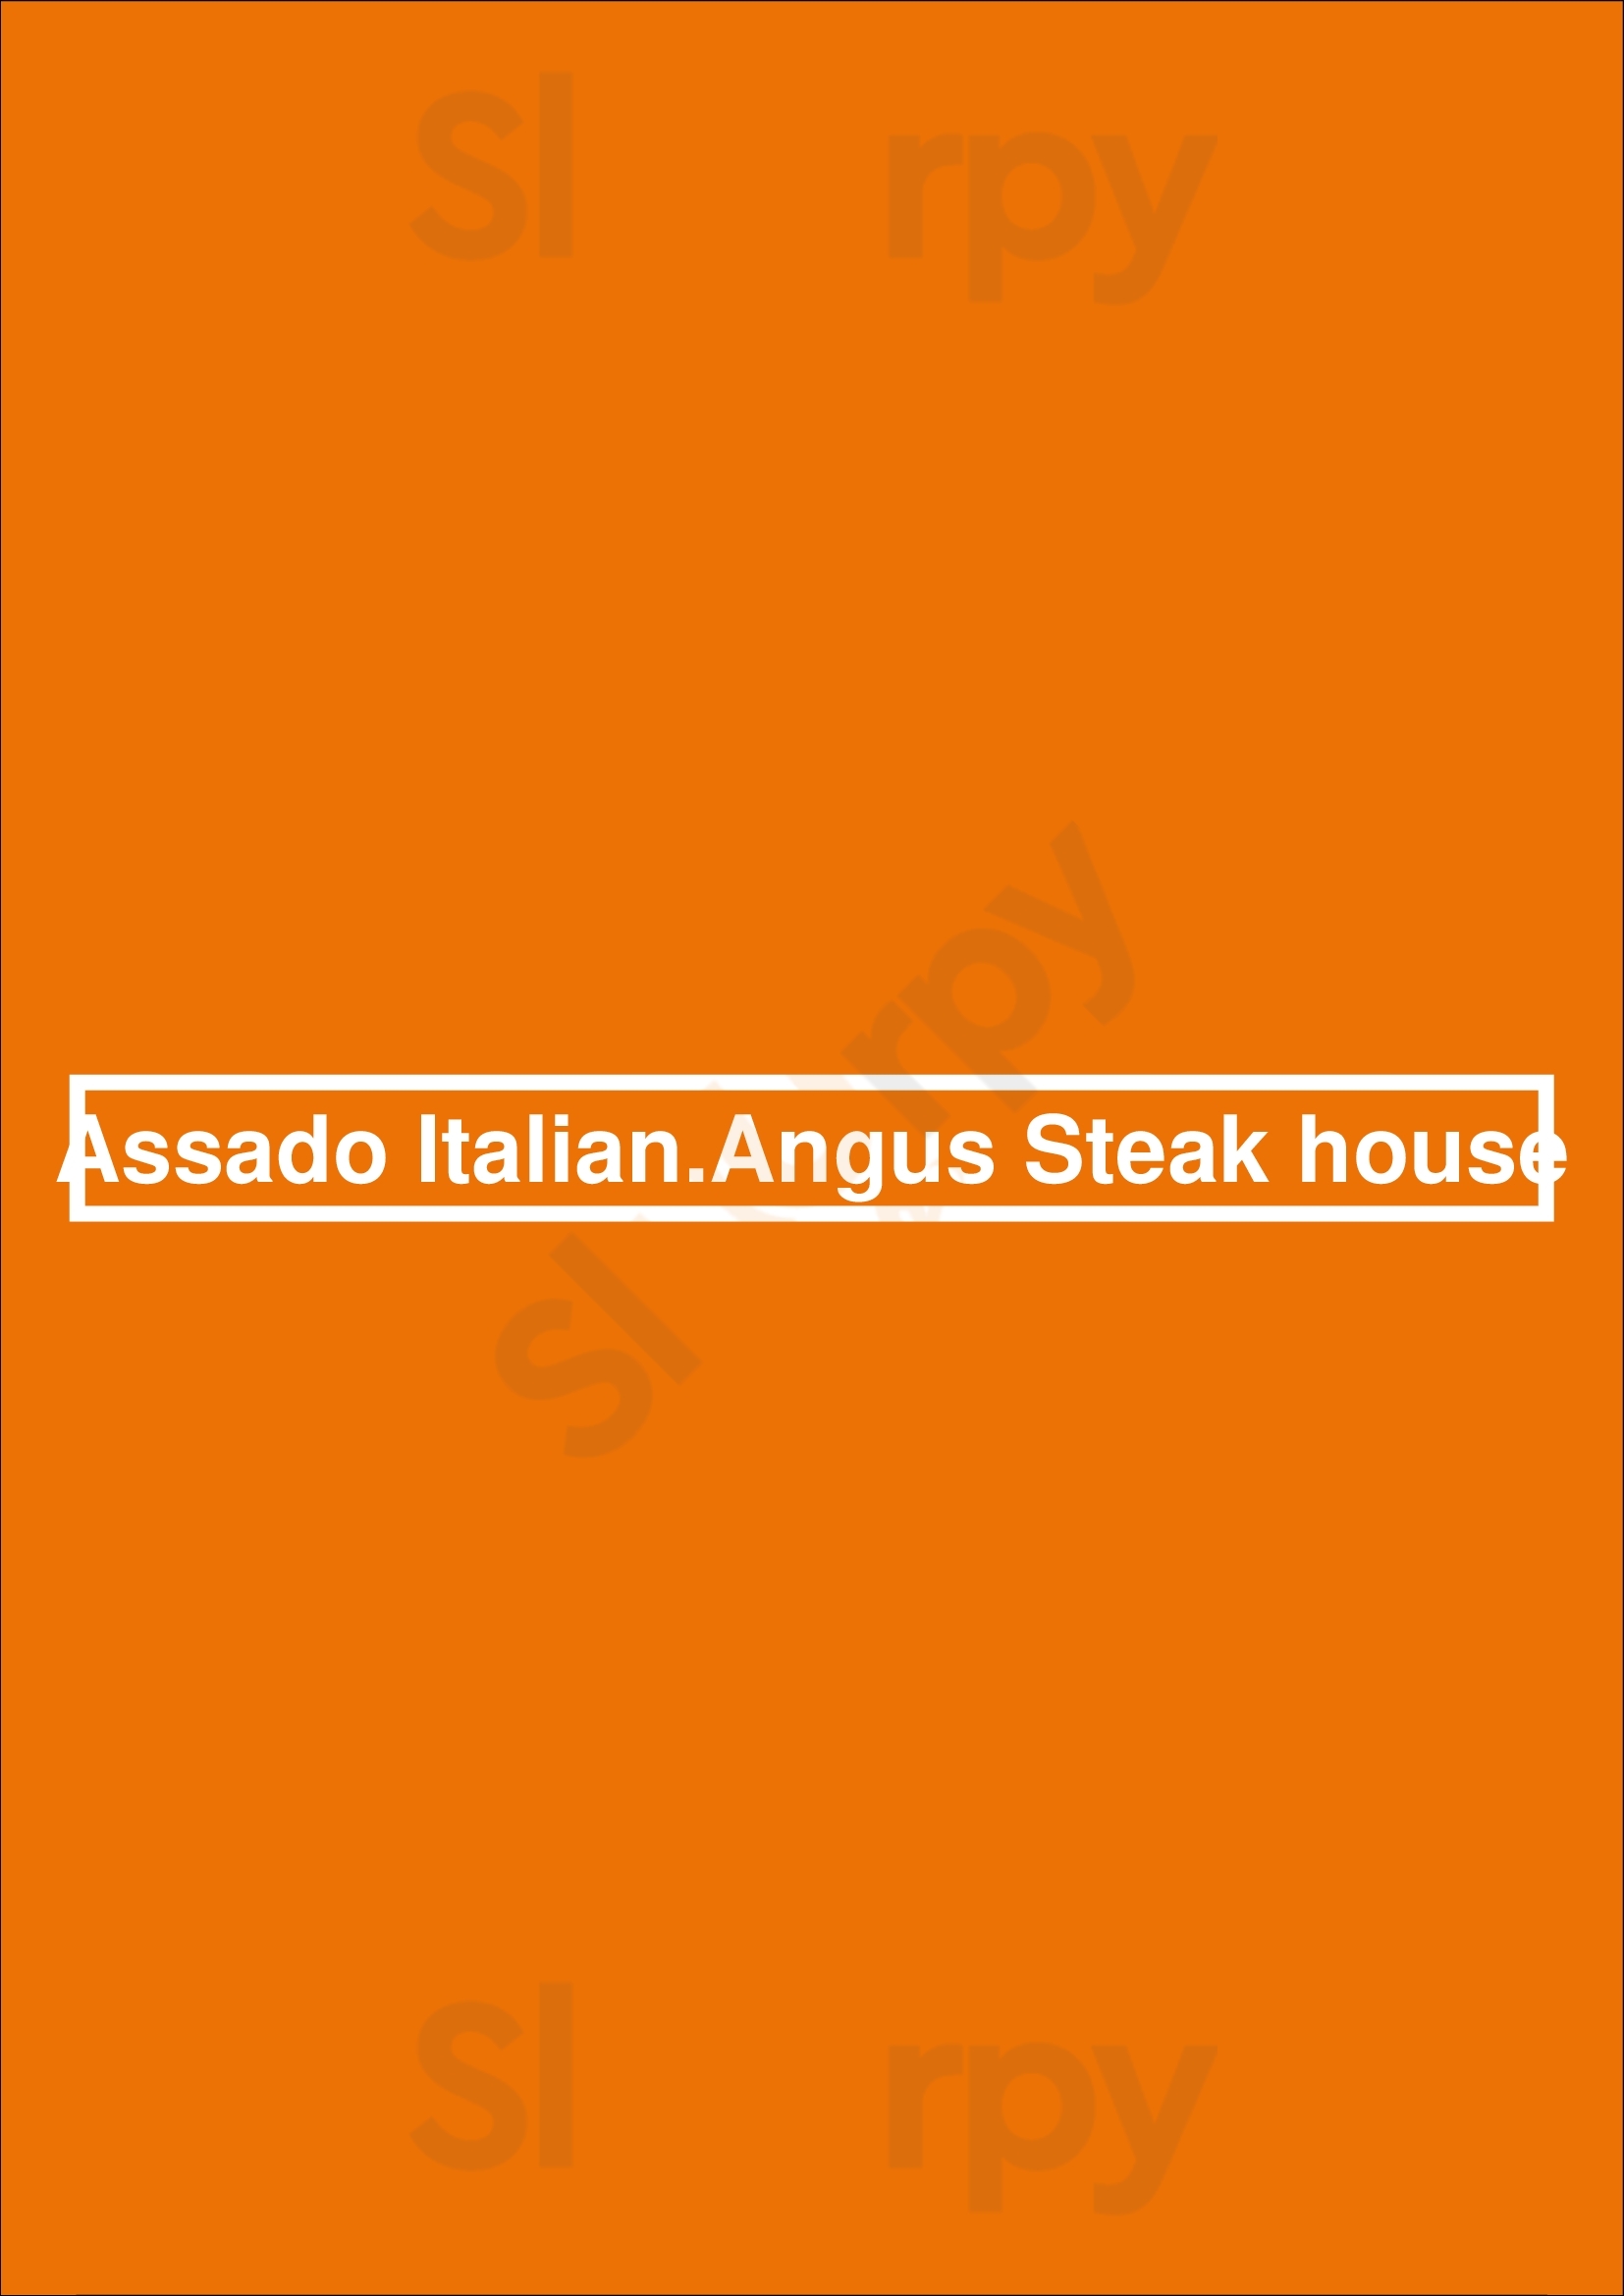 Assado Italian Angus Steak House Vilamoura  Menu - 1